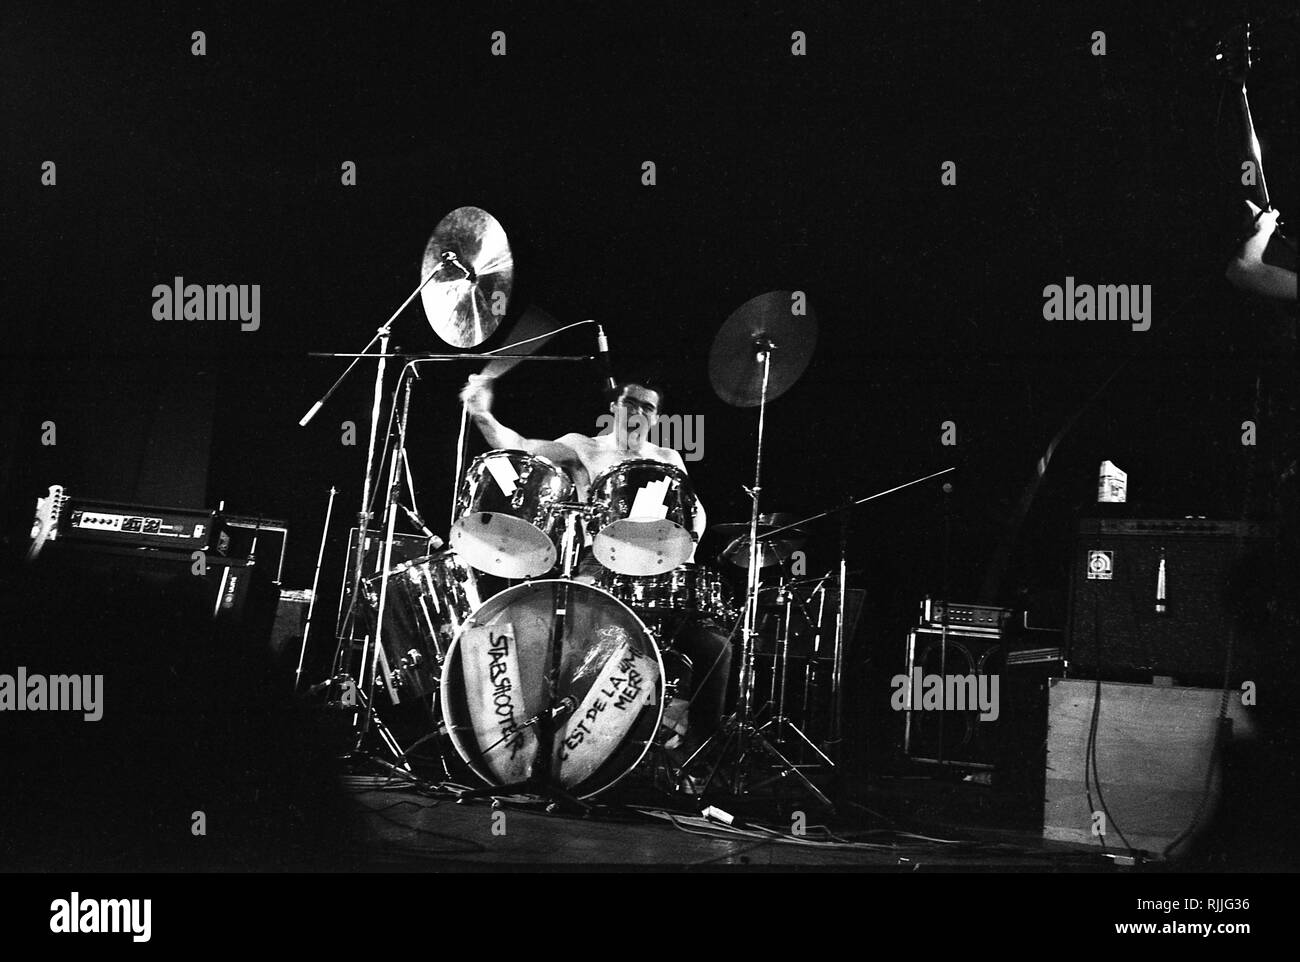 Starshooter Concert in Lyon, 1977 Stock Photo